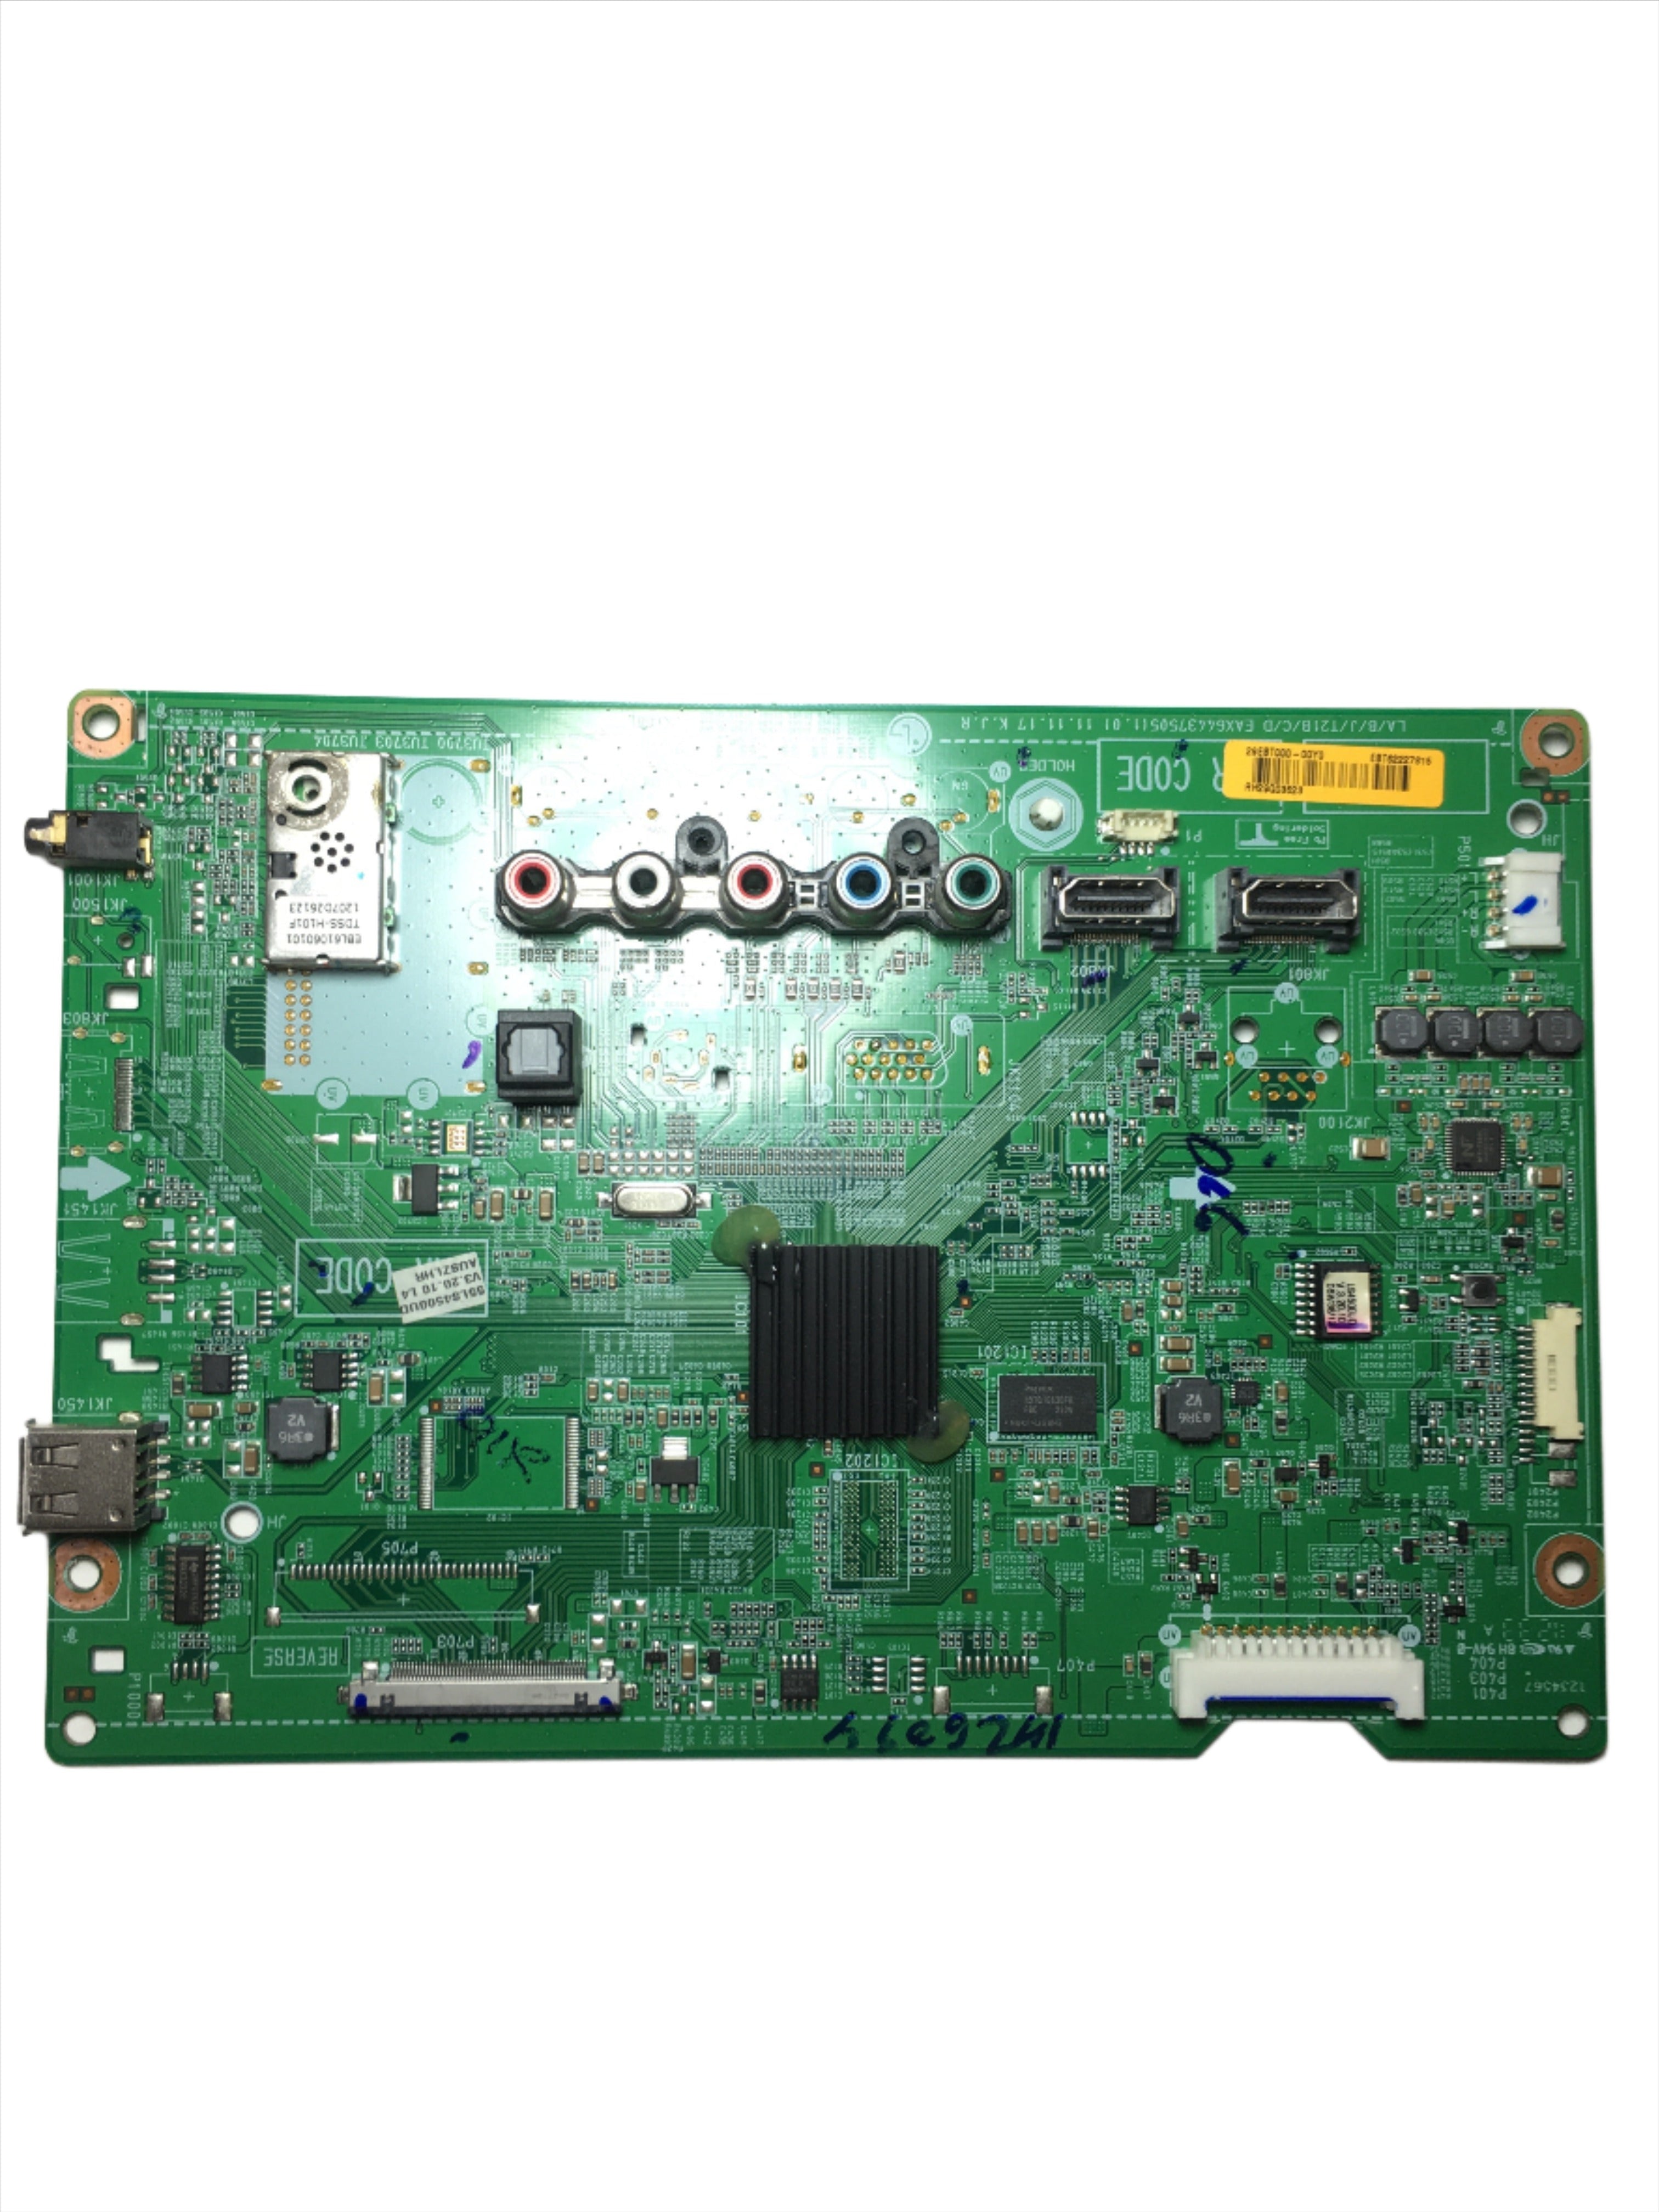 LG EBT62227815 (EAX64437505) Main Board